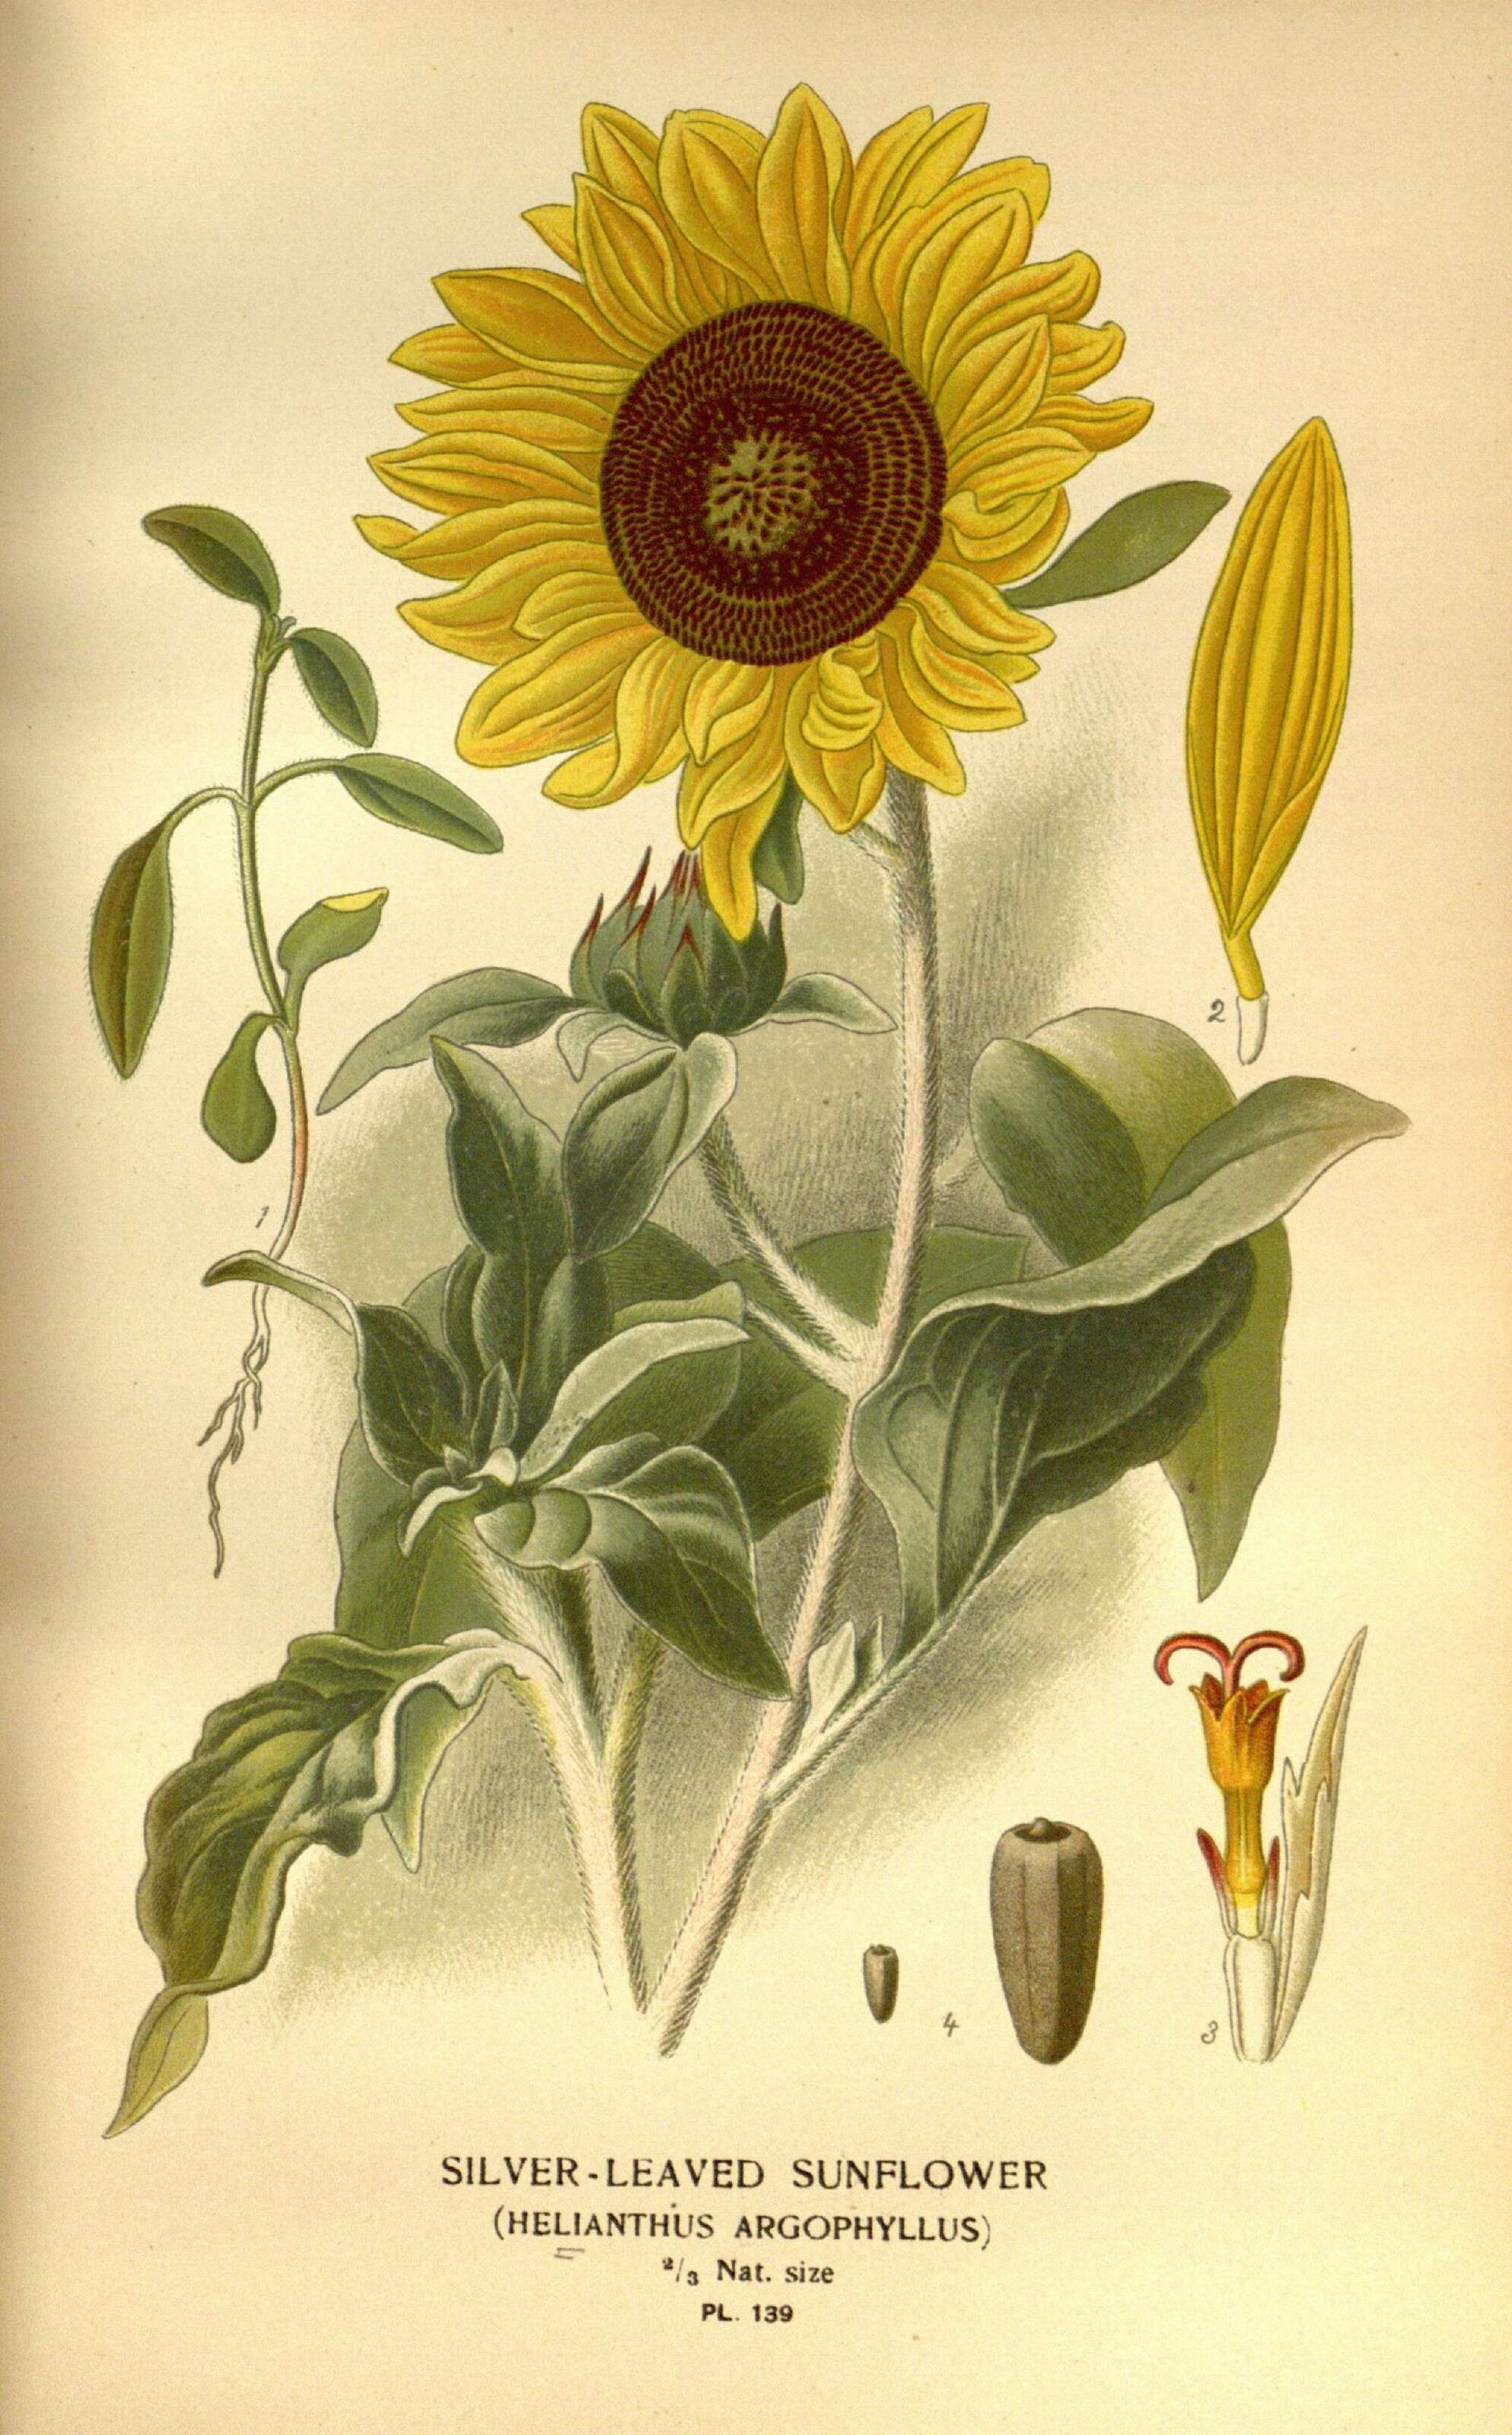 Image of silverleaf sunflower